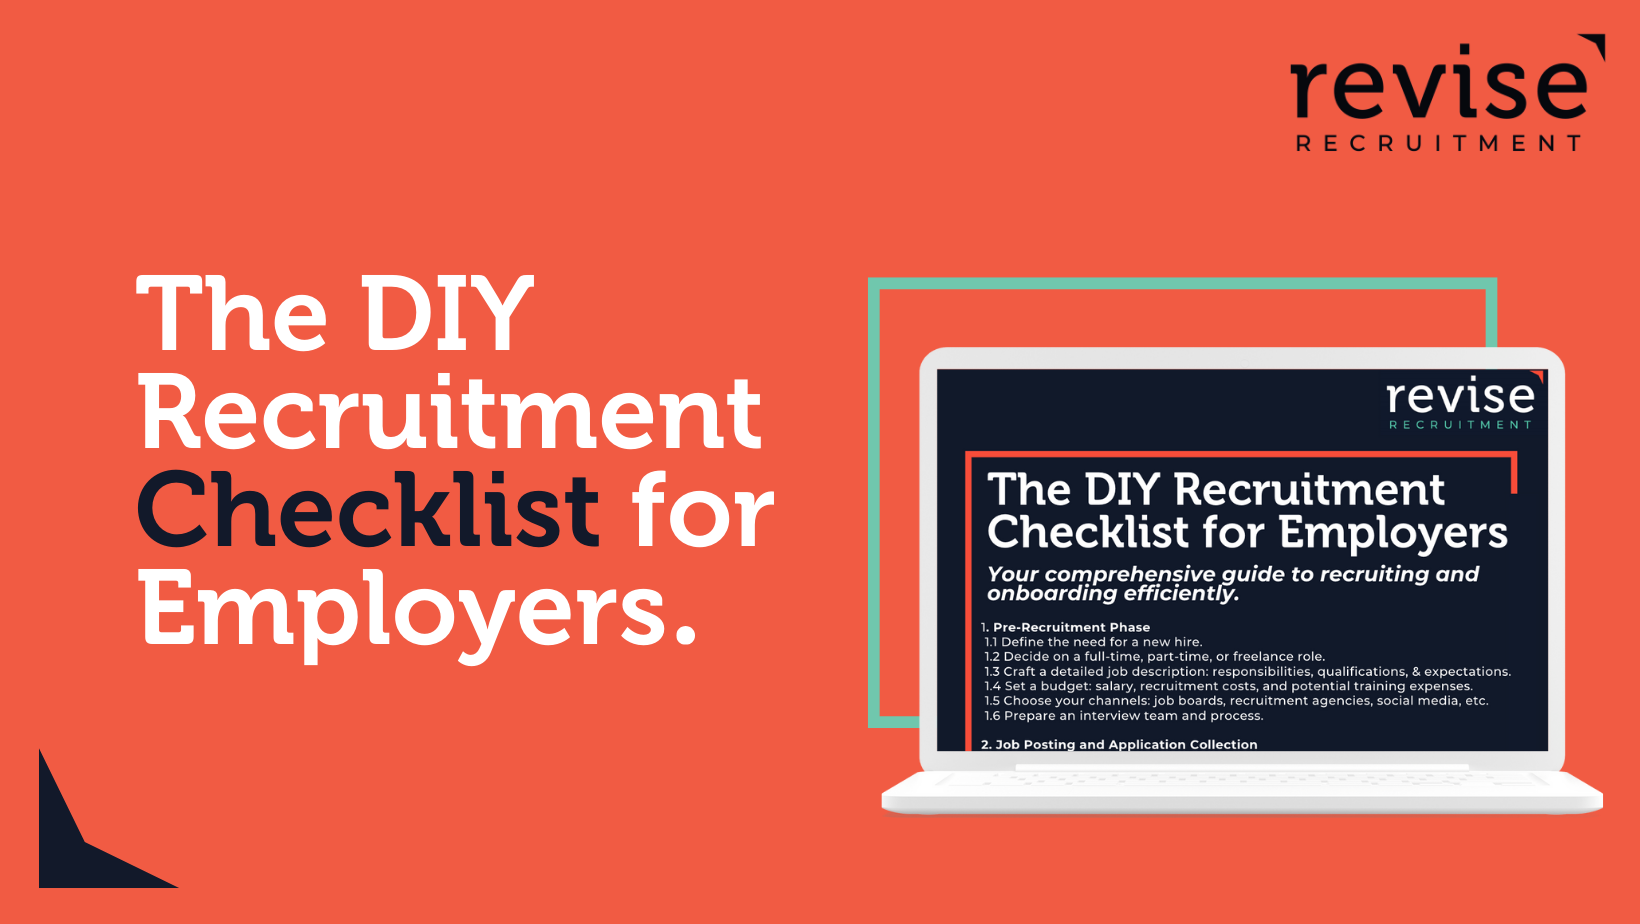 The DIY Recruitment Checklist